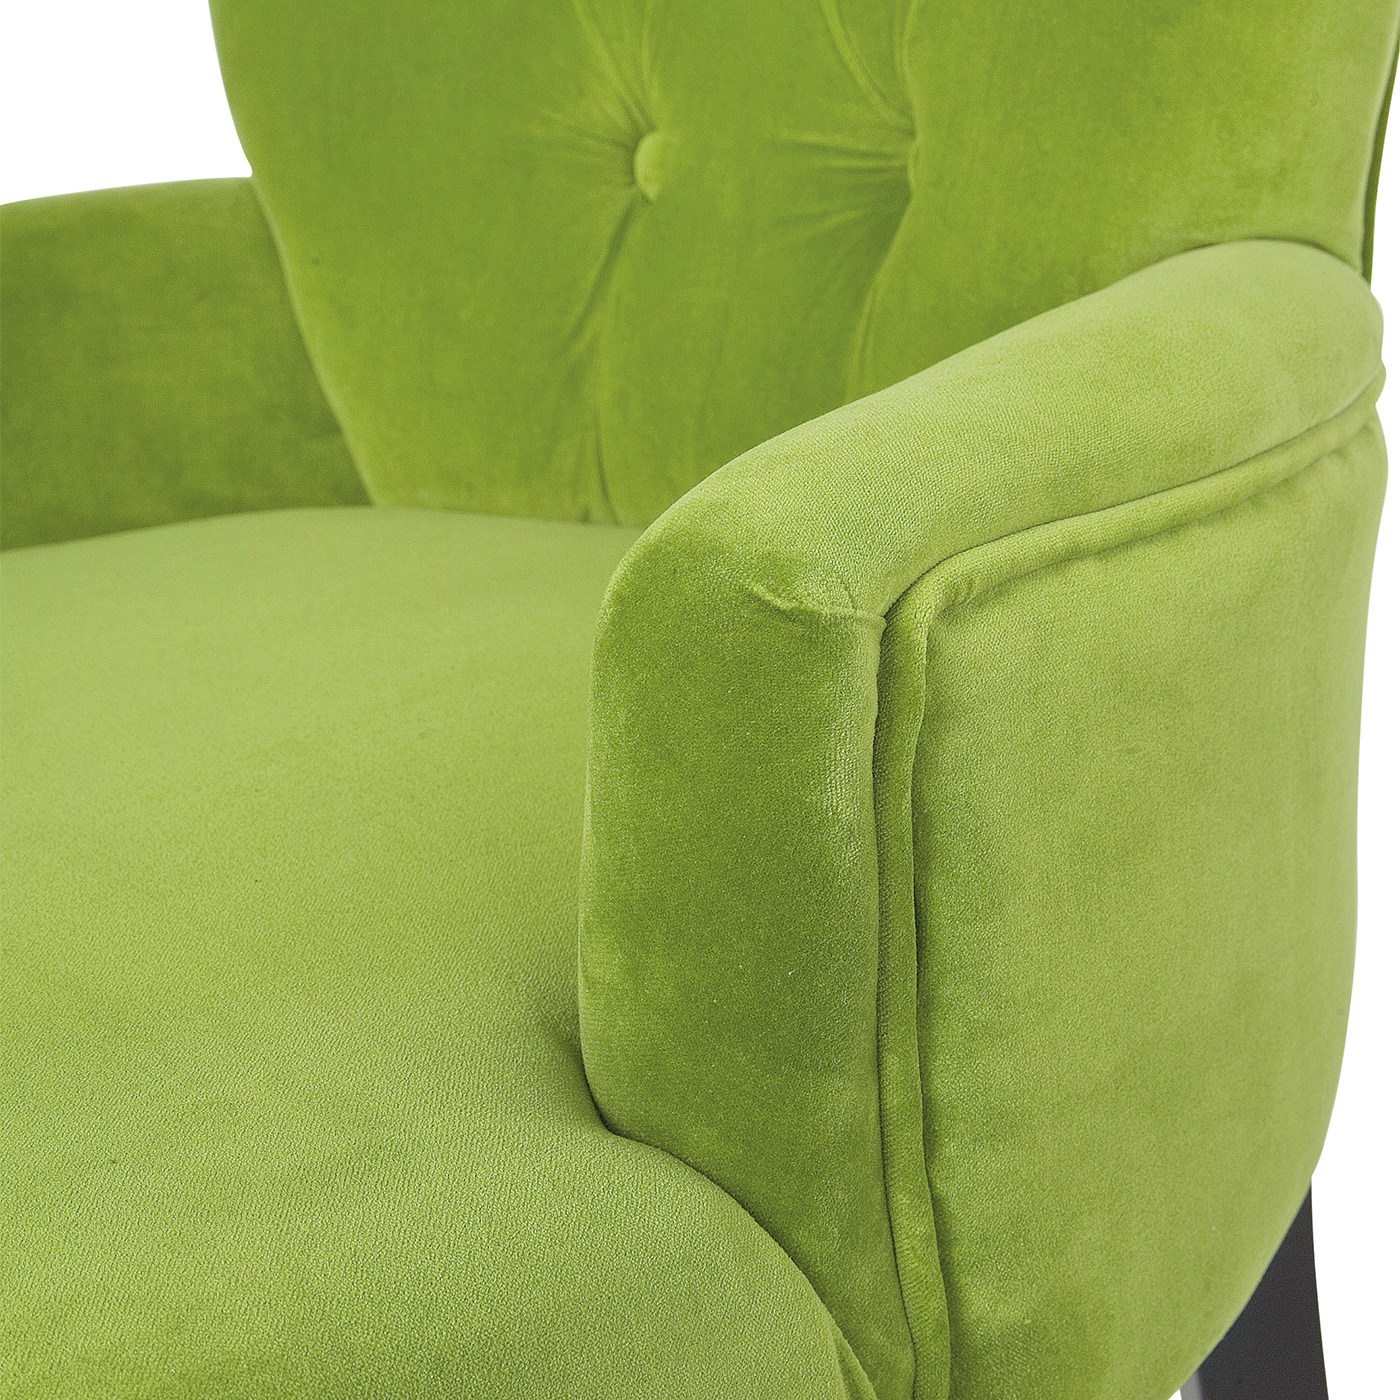 HI 1353 0125 – Armchair Elegance Baroque Green (4)